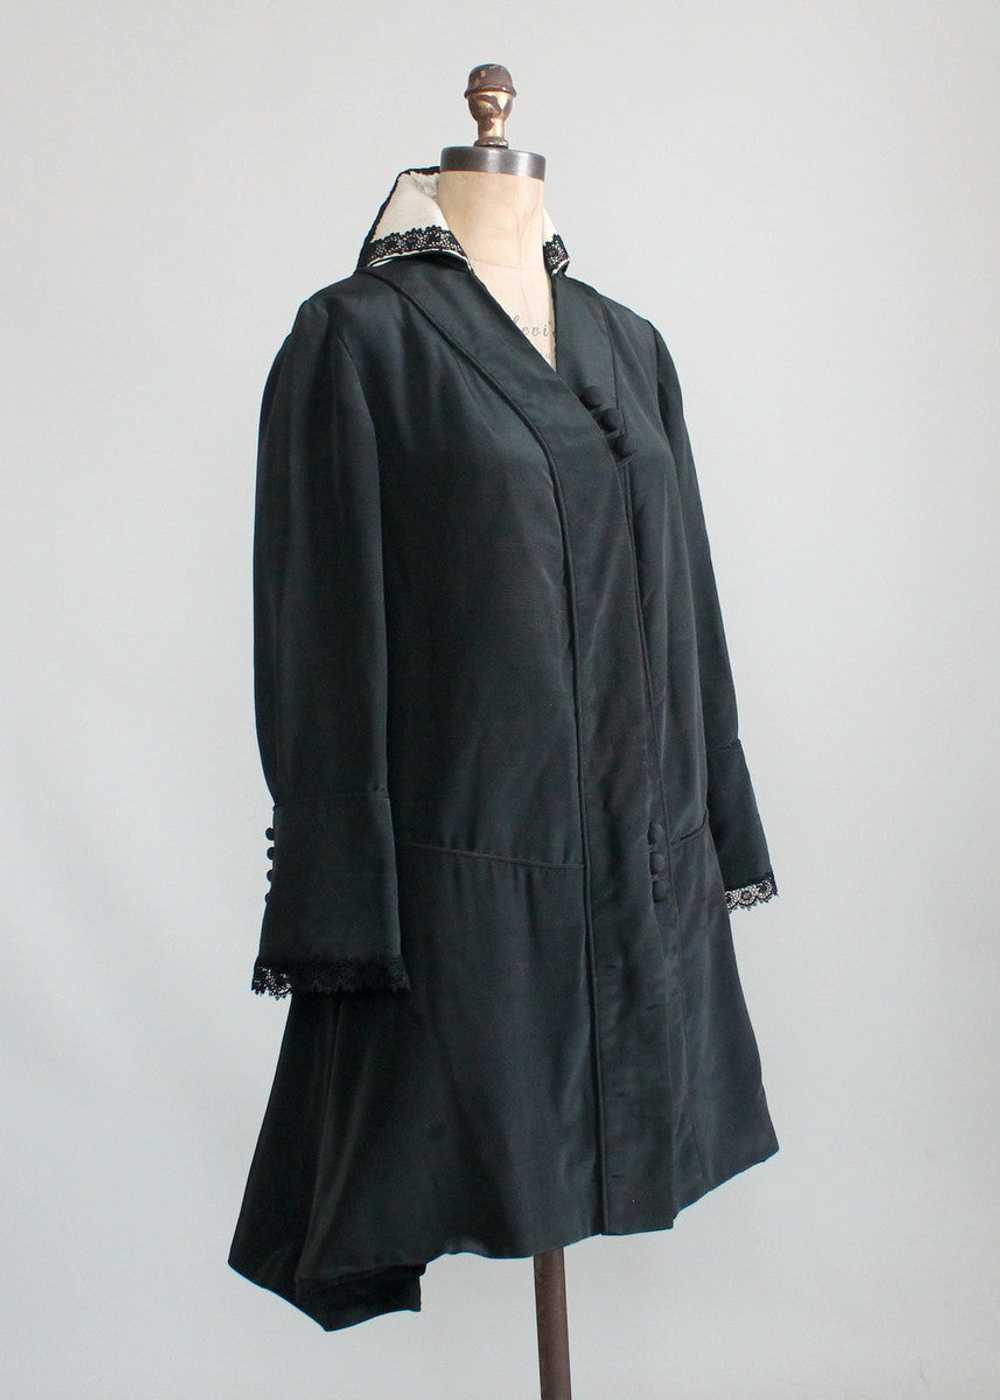 Antique Edwardian Black Silk Coat with Stand Up C… - image 2